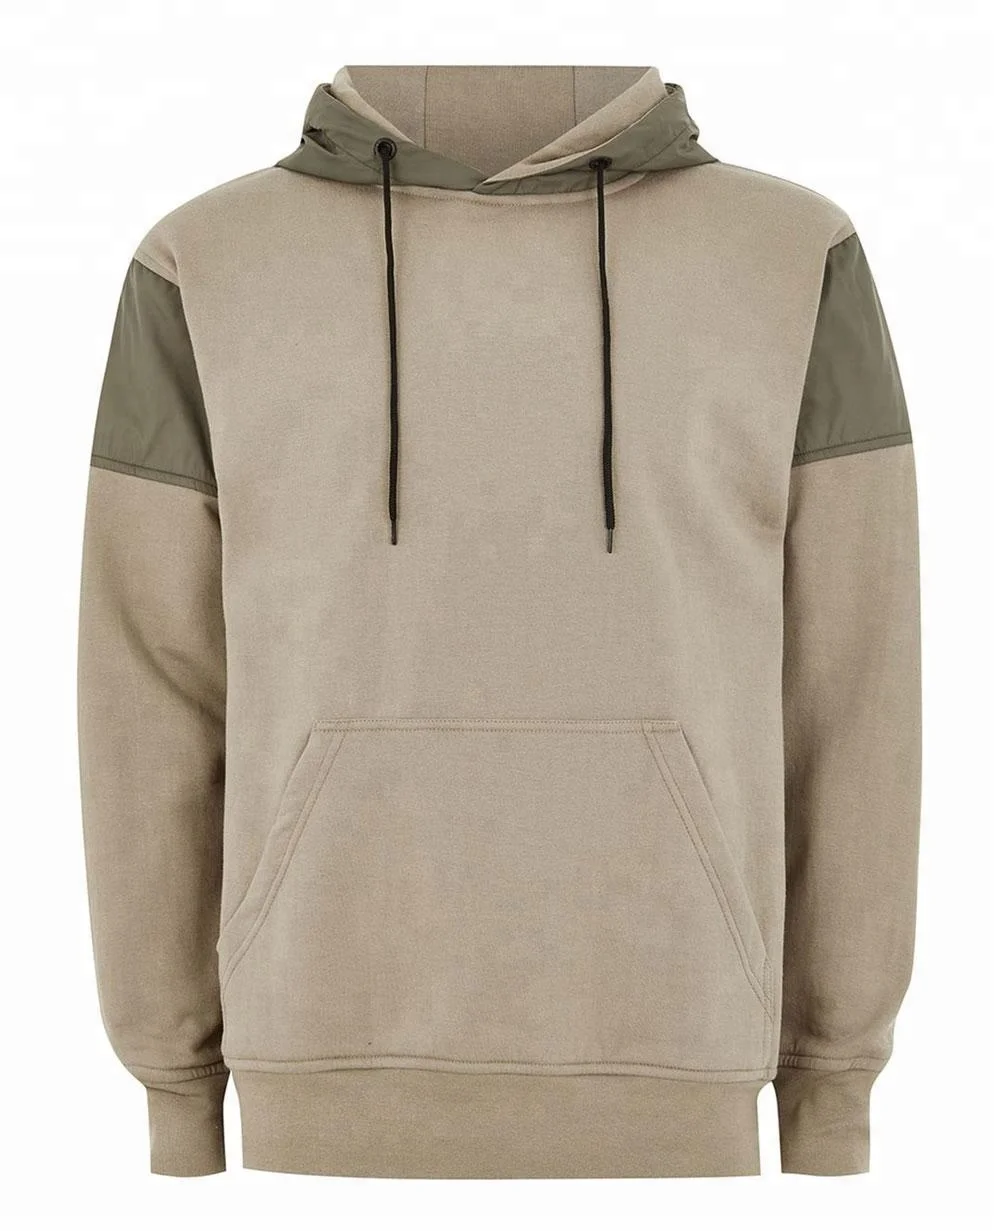 Factory price the fleece clothing / no zipper hoodie jacket / wholesale cheap plain hoodies